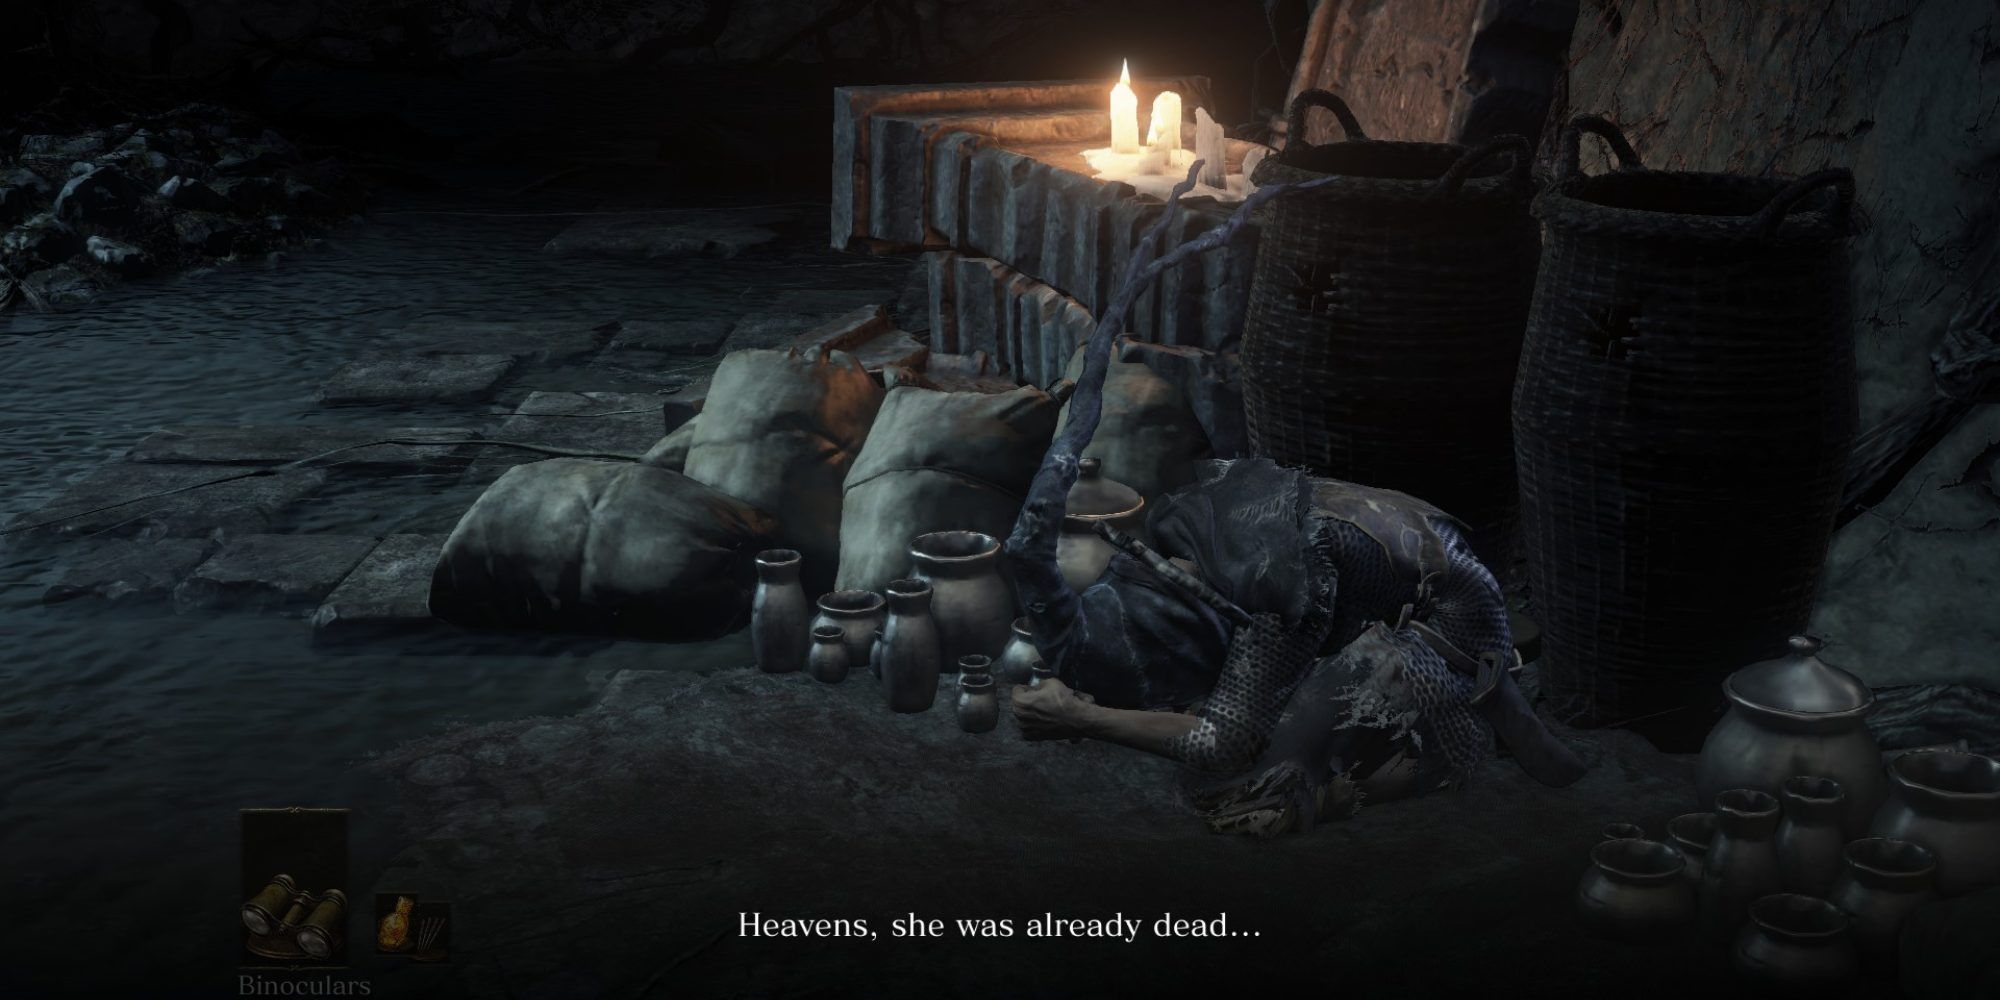 Dark Souls 3 NPC Greirat curled up, mourning Loretta.